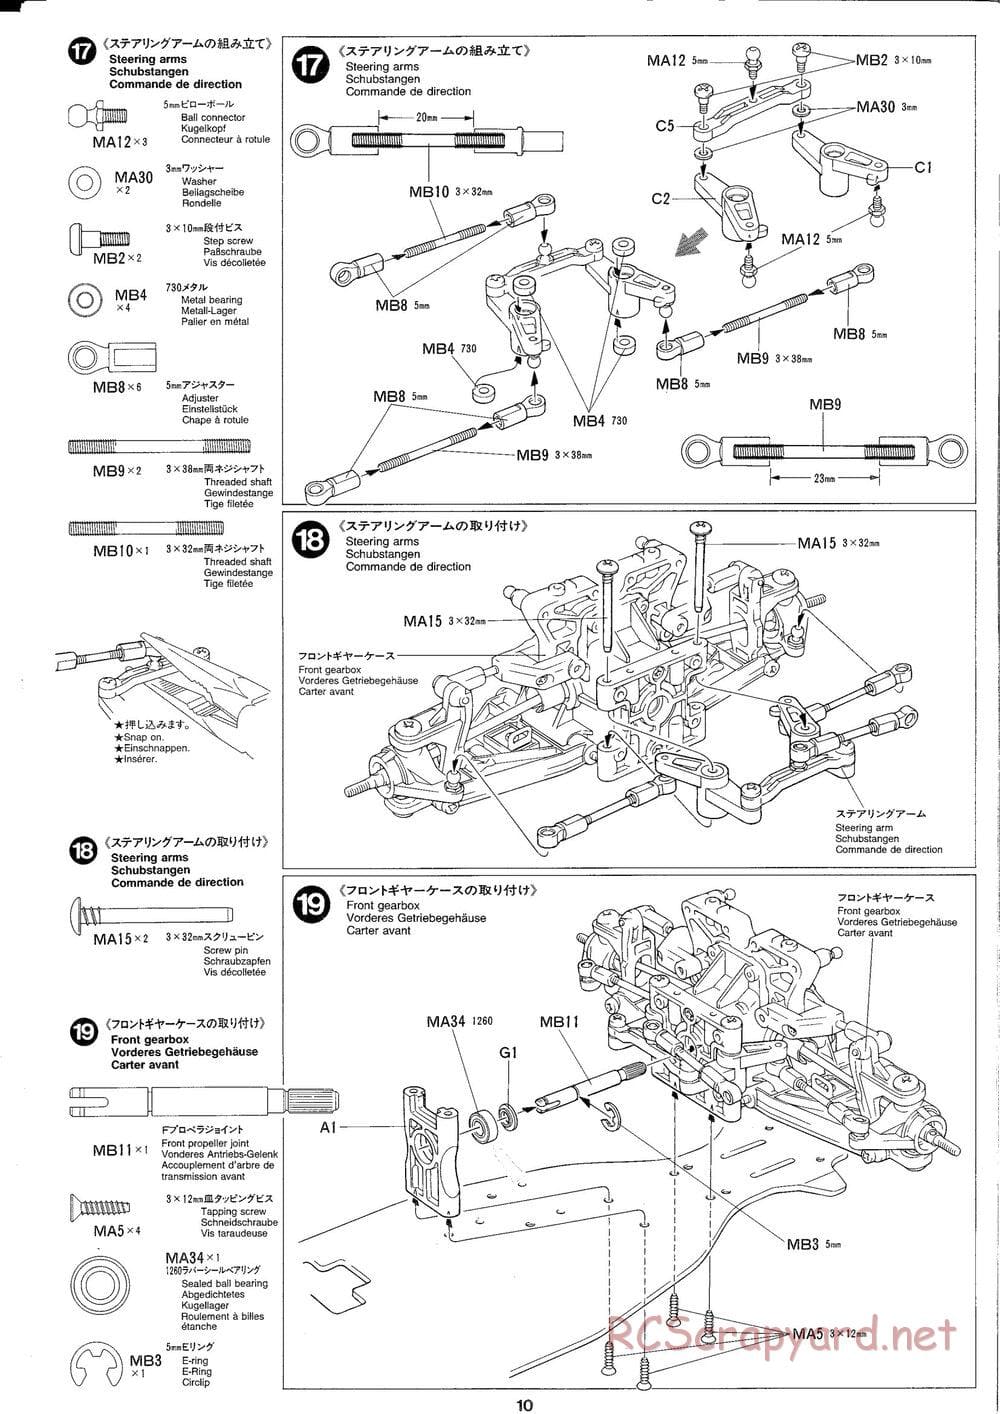 Tamiya - TGX Mk.1 TRF Special Chassis - Manual - Page 10